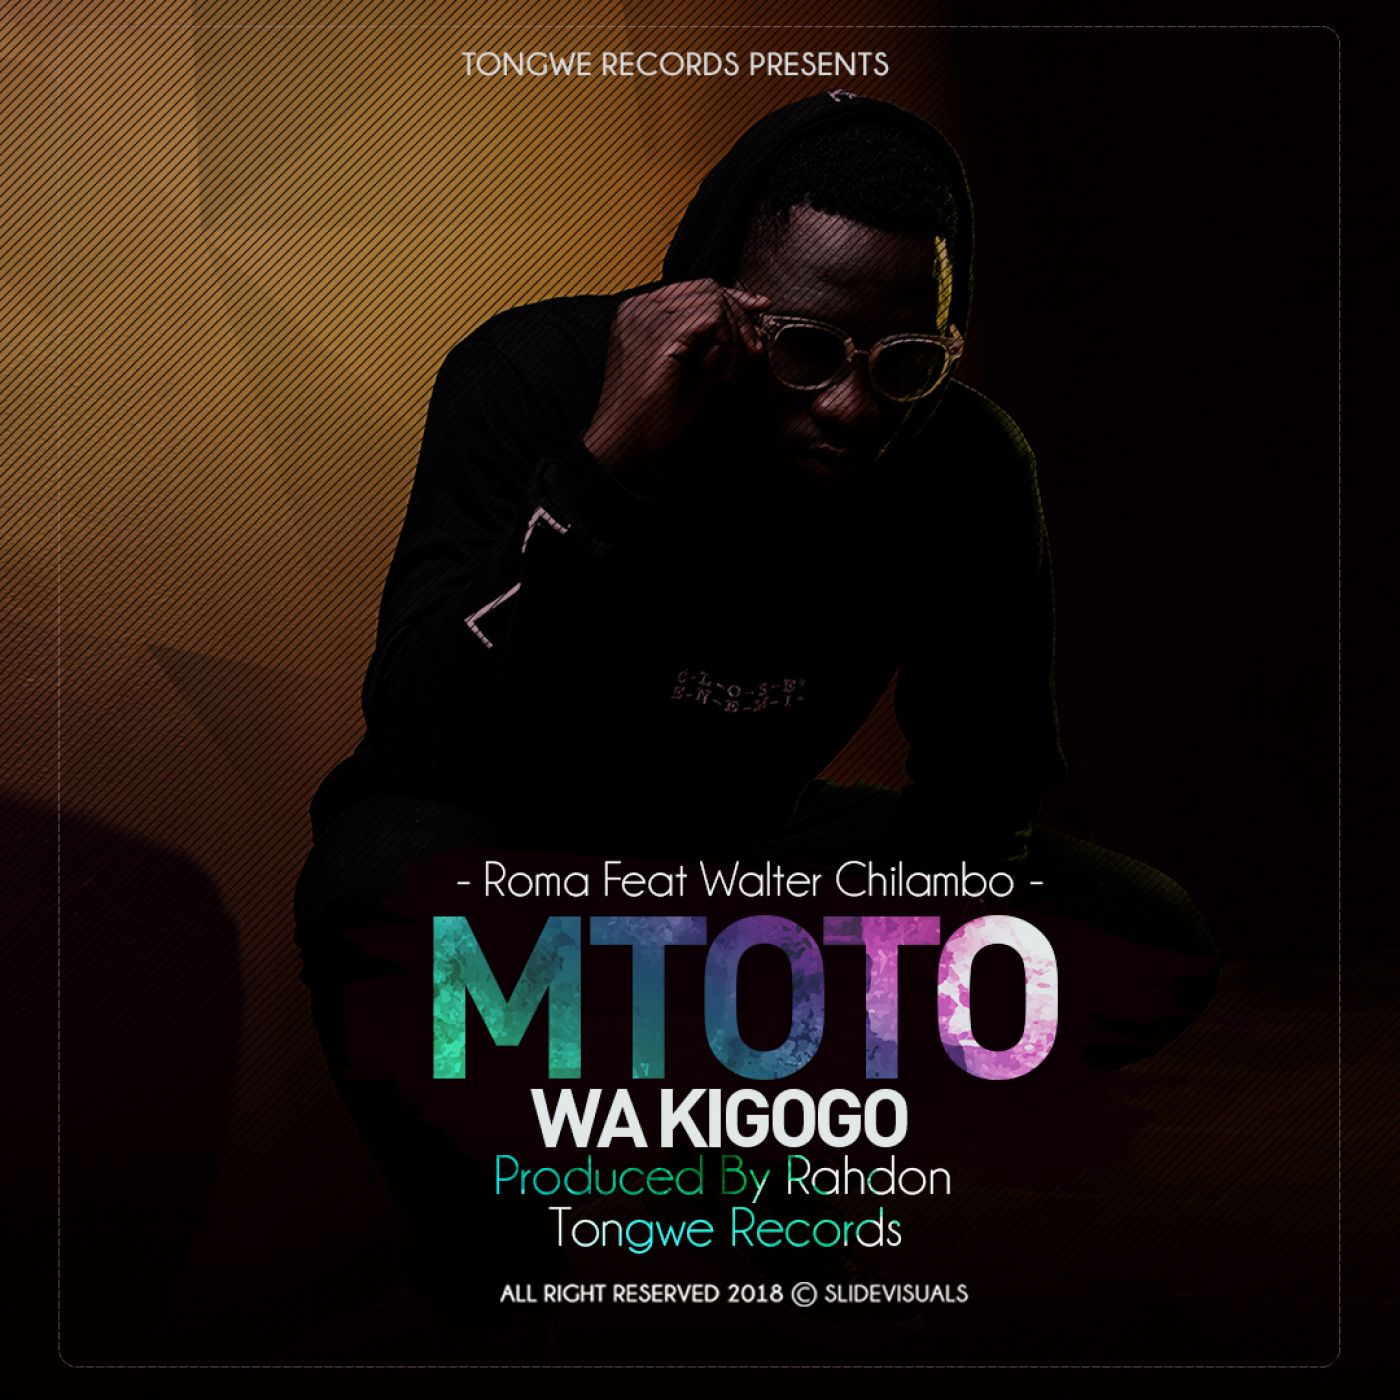 Mtoto Wa Kigogo Feat Walter Chilambo